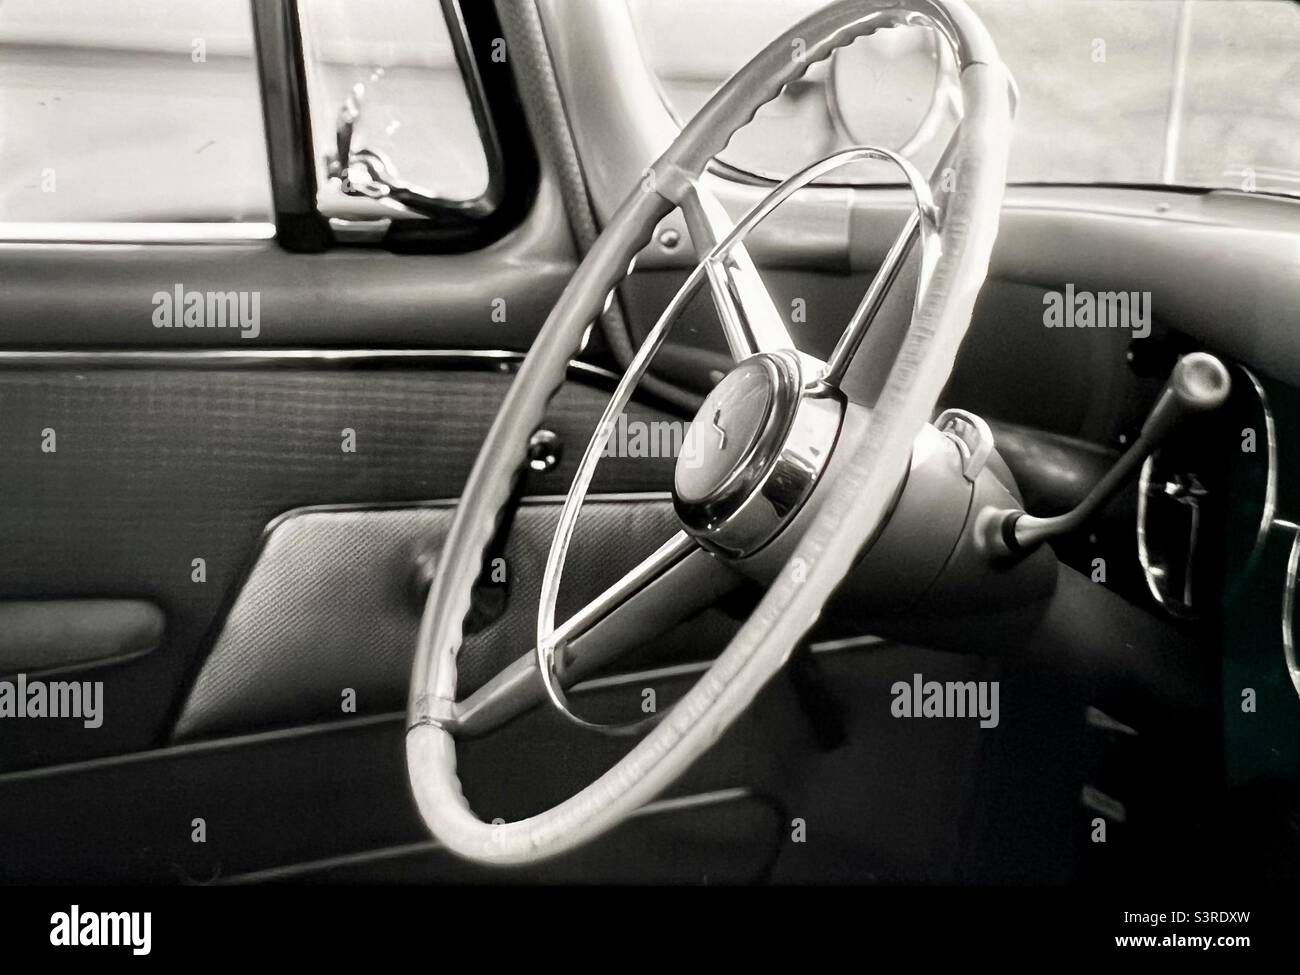 Car steering wheel and dashboard classic Studebaker car mid century modern Automotive design Stock Photo